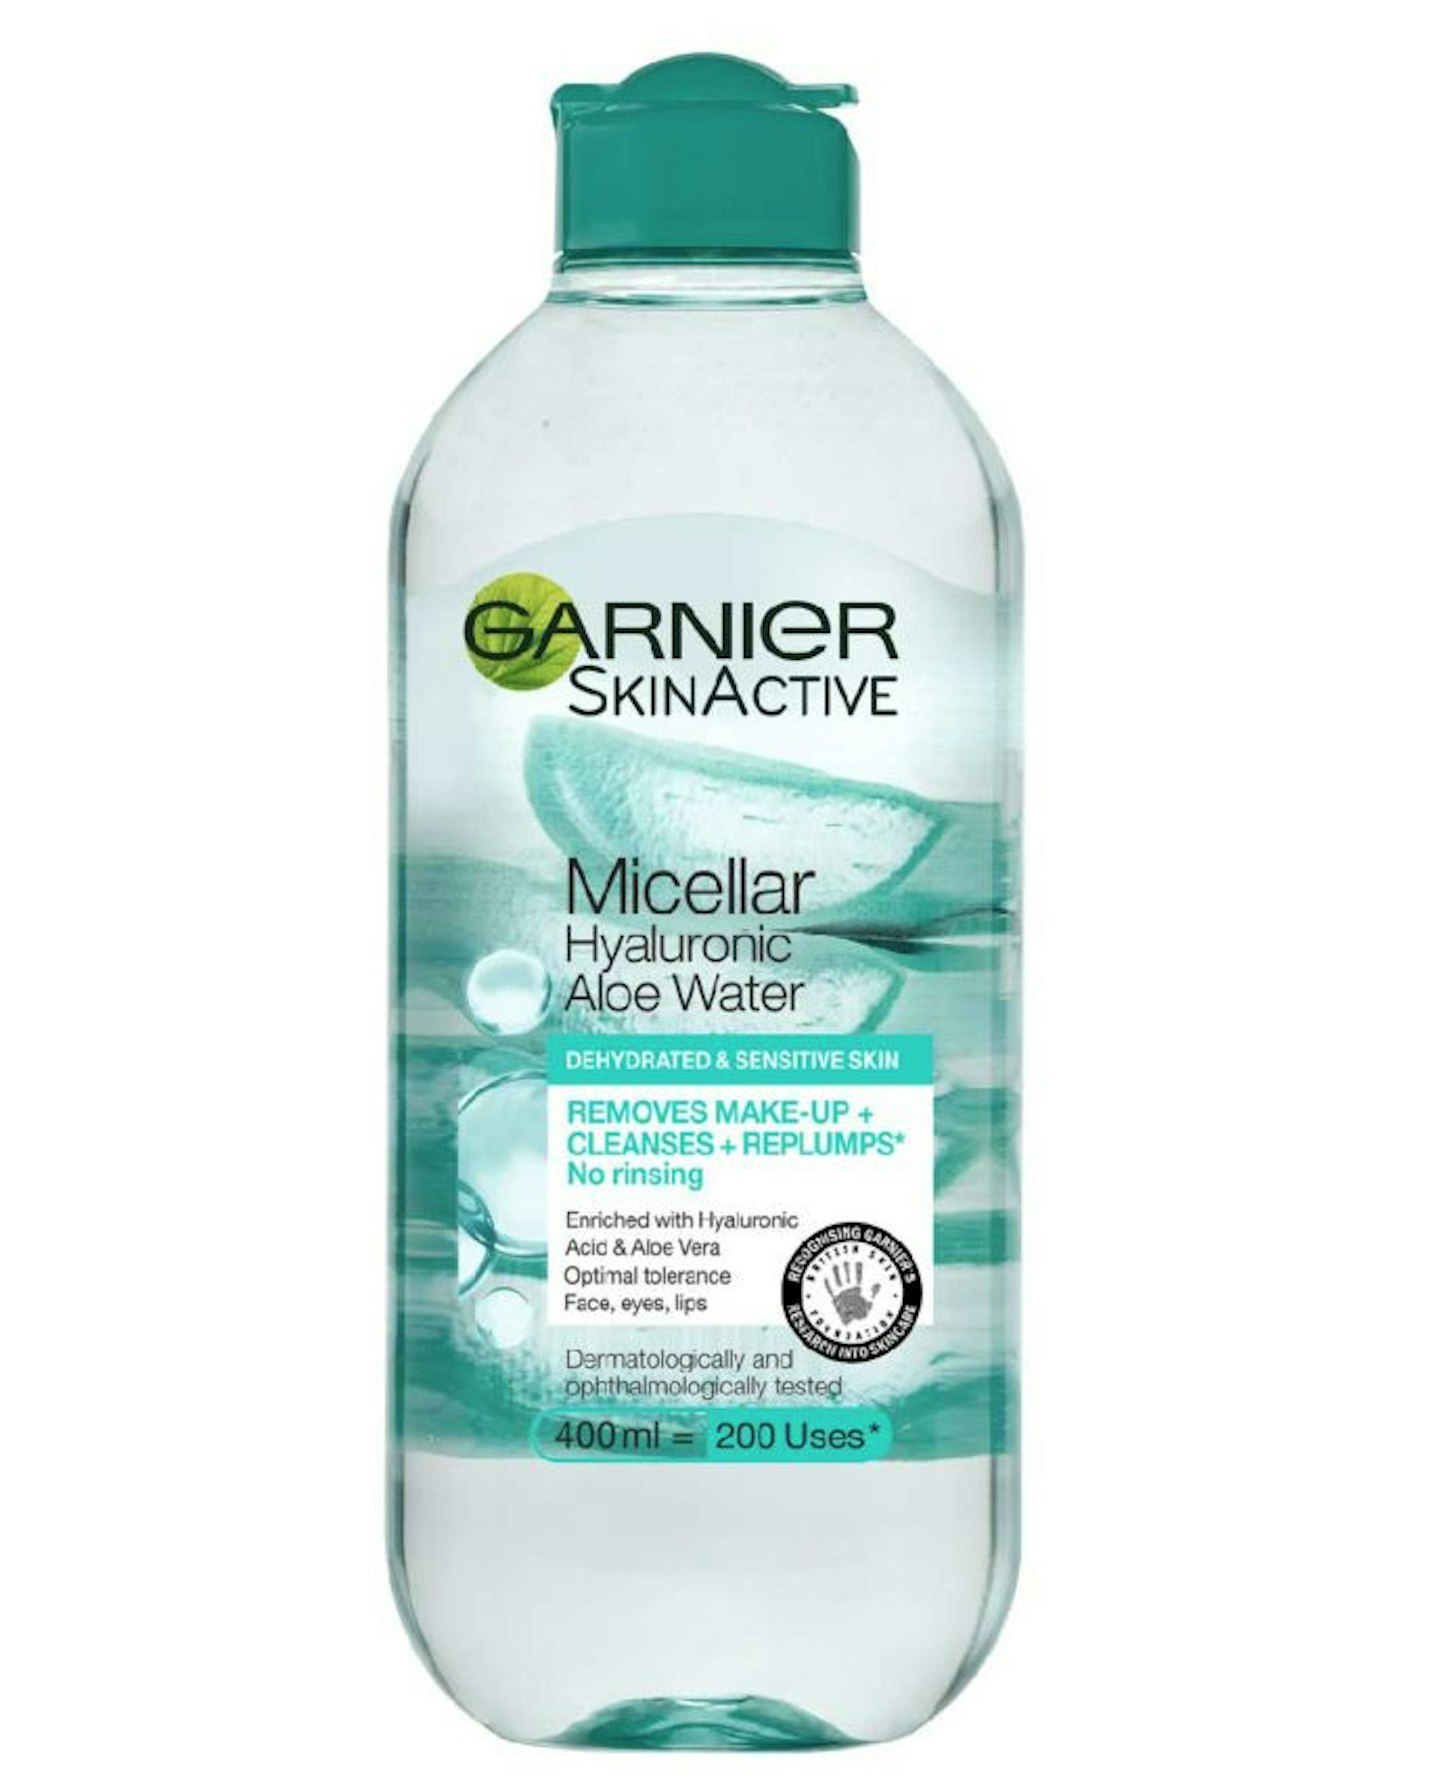 Garnier Micellar Hyaluronic Aloe Water, £6.99